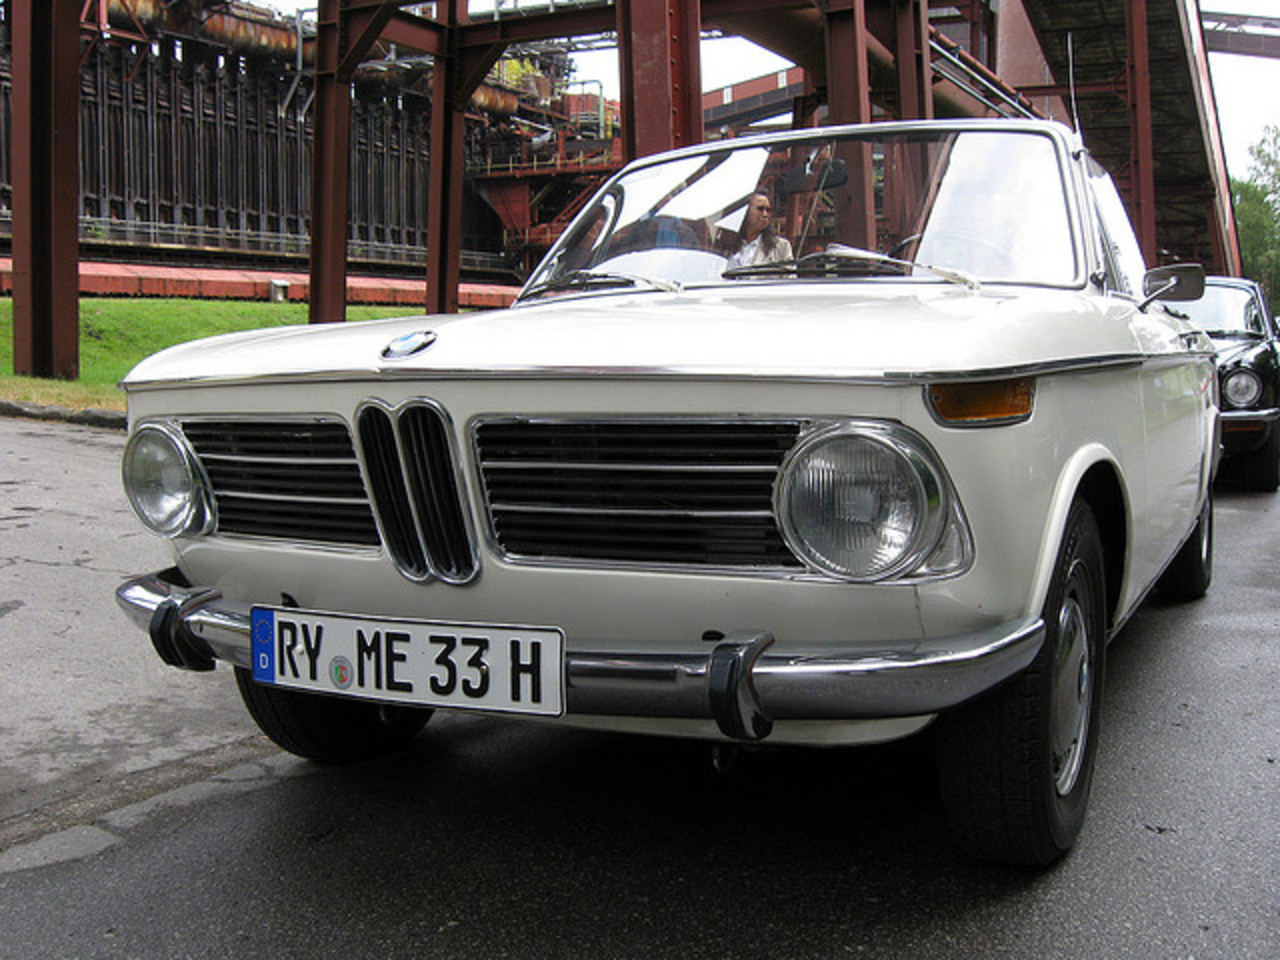 BMW 1600 Cabrio | Flickr - Photo Sharing!